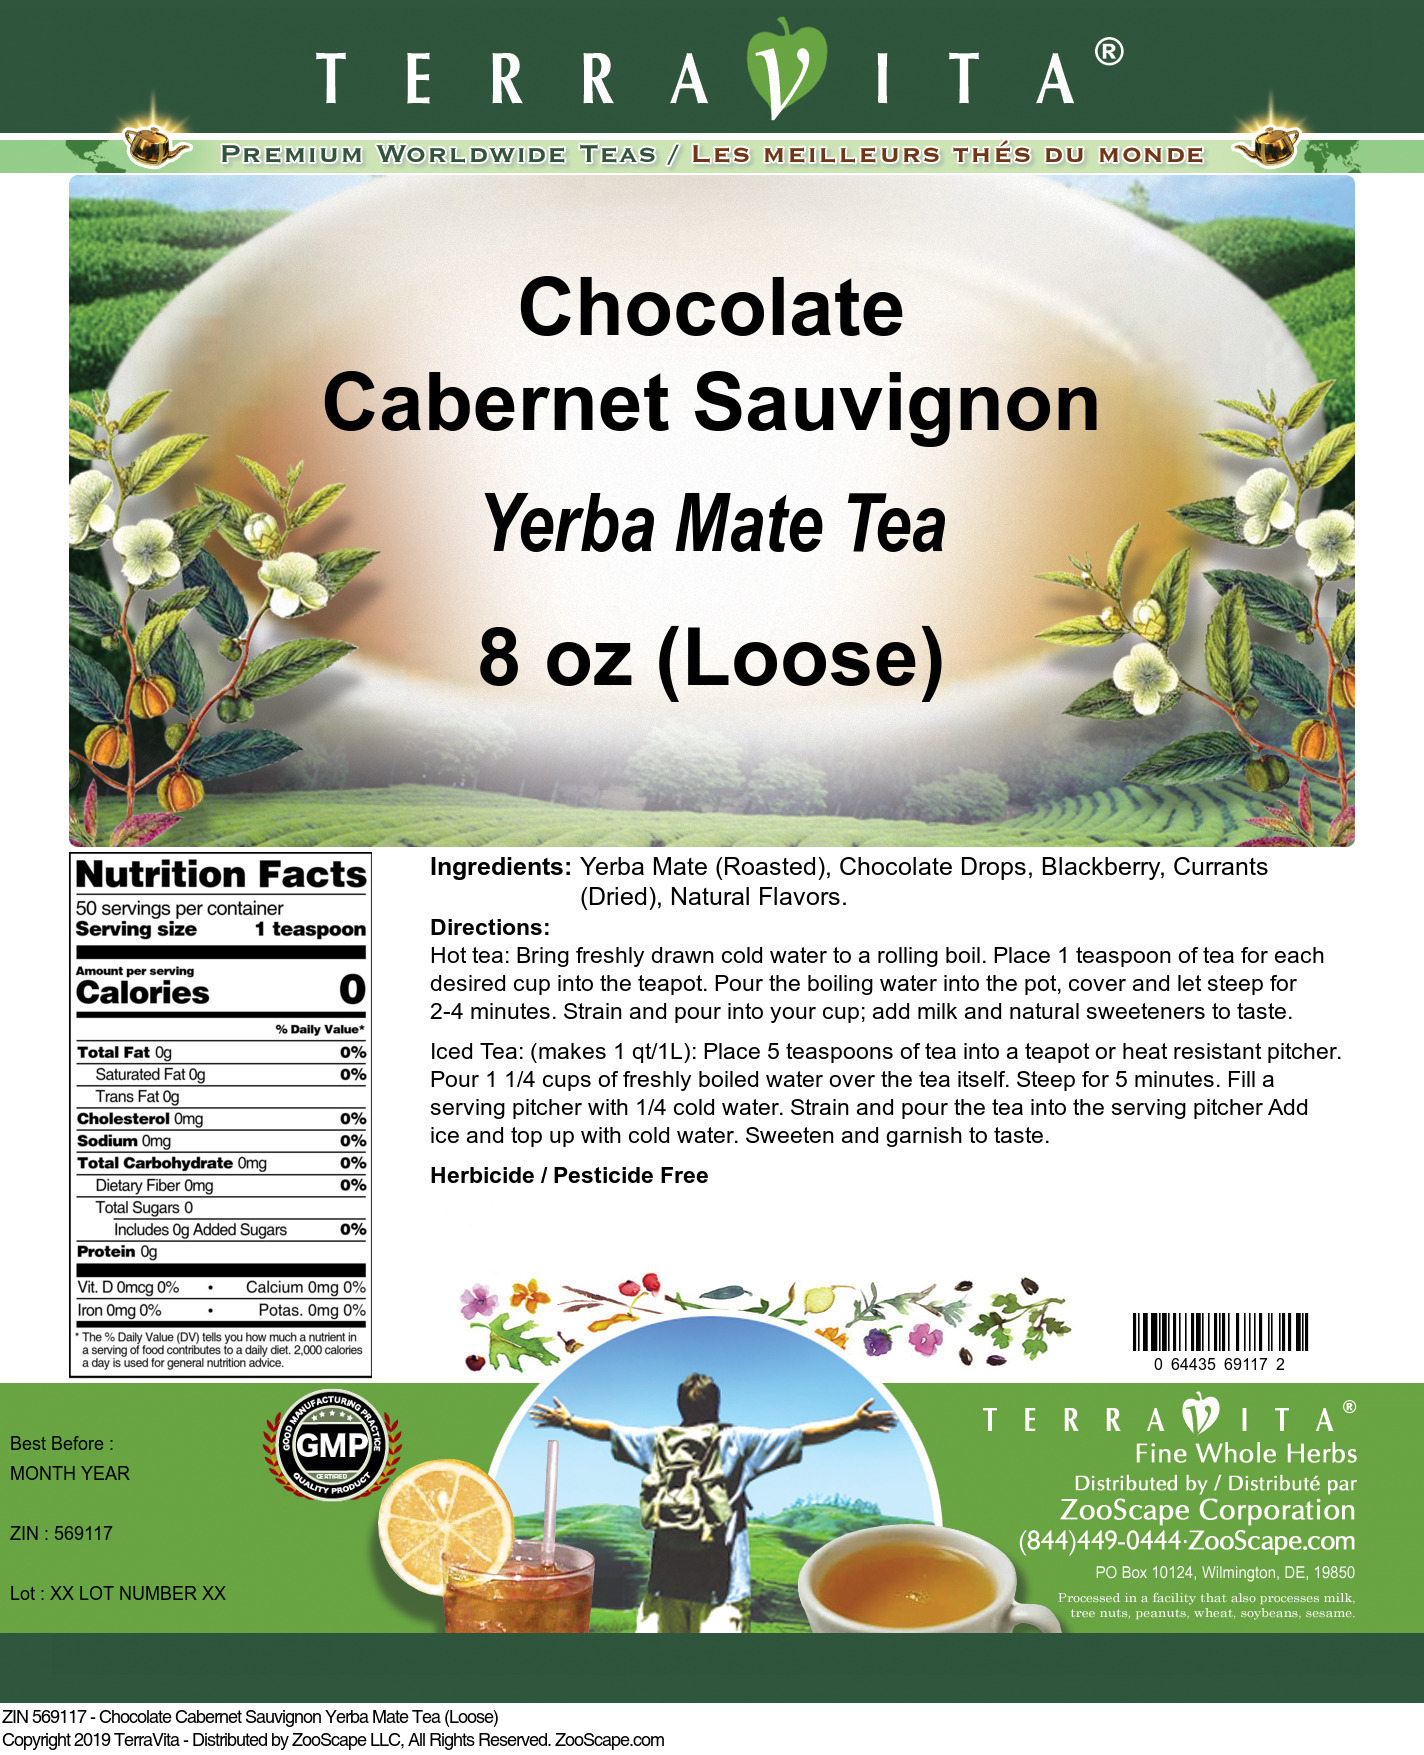 Chocolate Cabernet Sauvignon Yerba Mate Tea (Loose) - Label